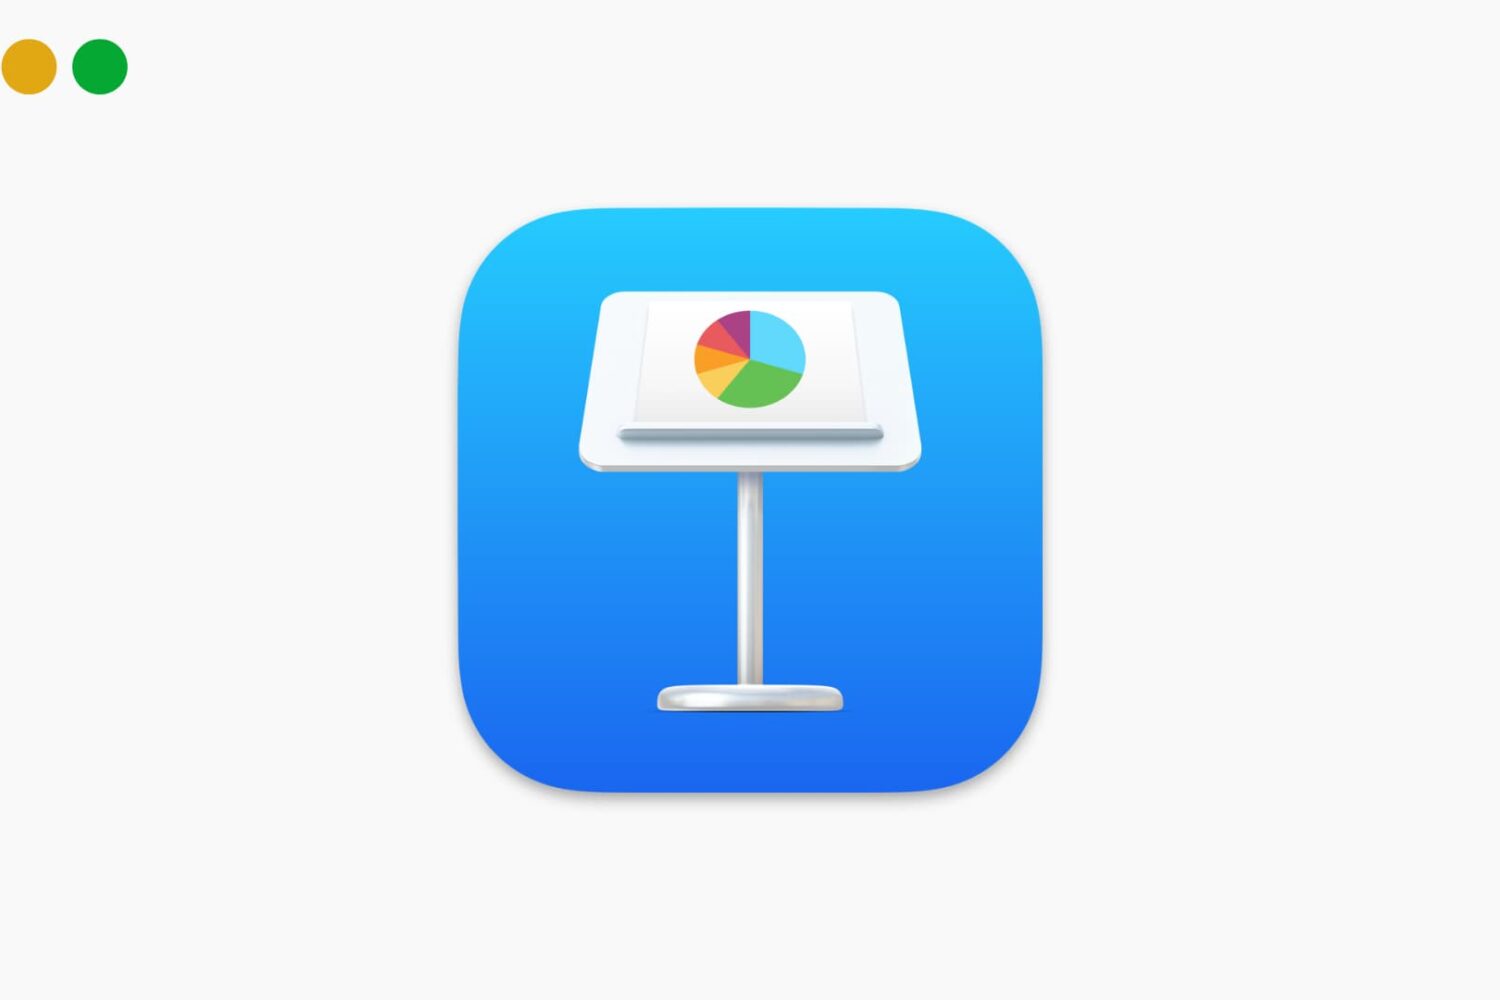 Mac Keynote app icon on a solid gray background